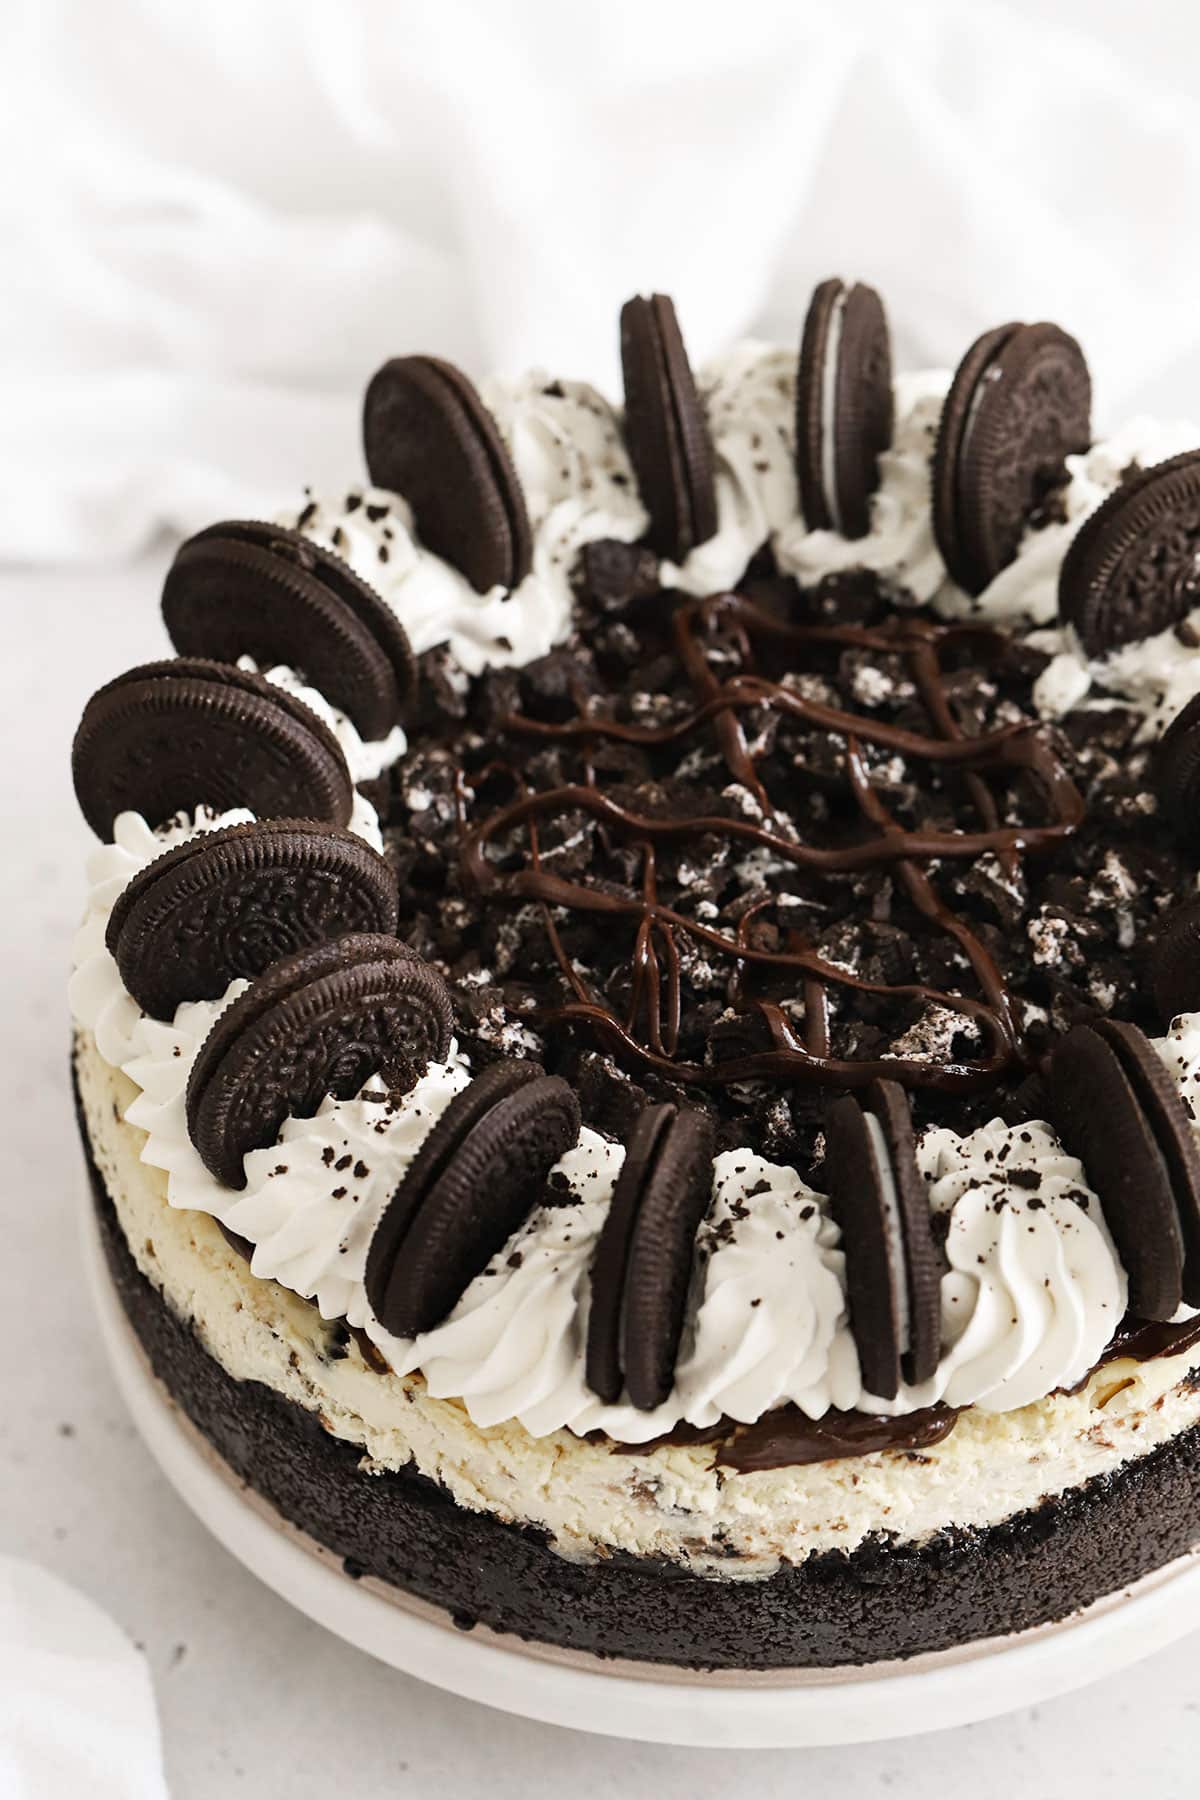 Whole Gluten-Free Oreo Cheesecake Topped With Whipped Cream Swirls, Chocolate Ganache & Oreo Cookies